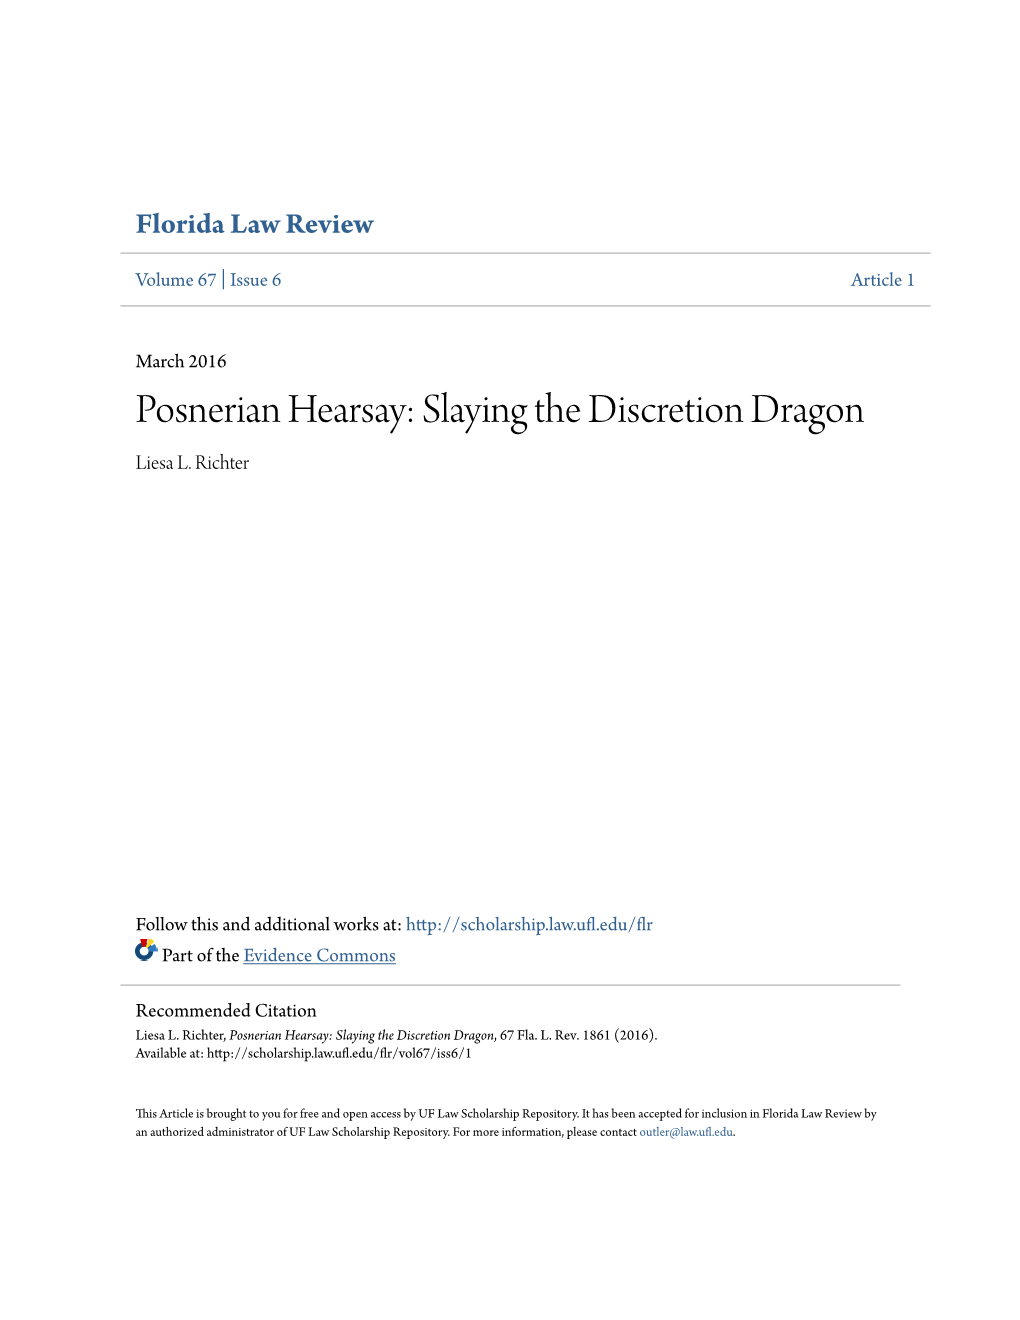 Posnerian Hearsay: Slaying the Discretion Dragon Liesa L